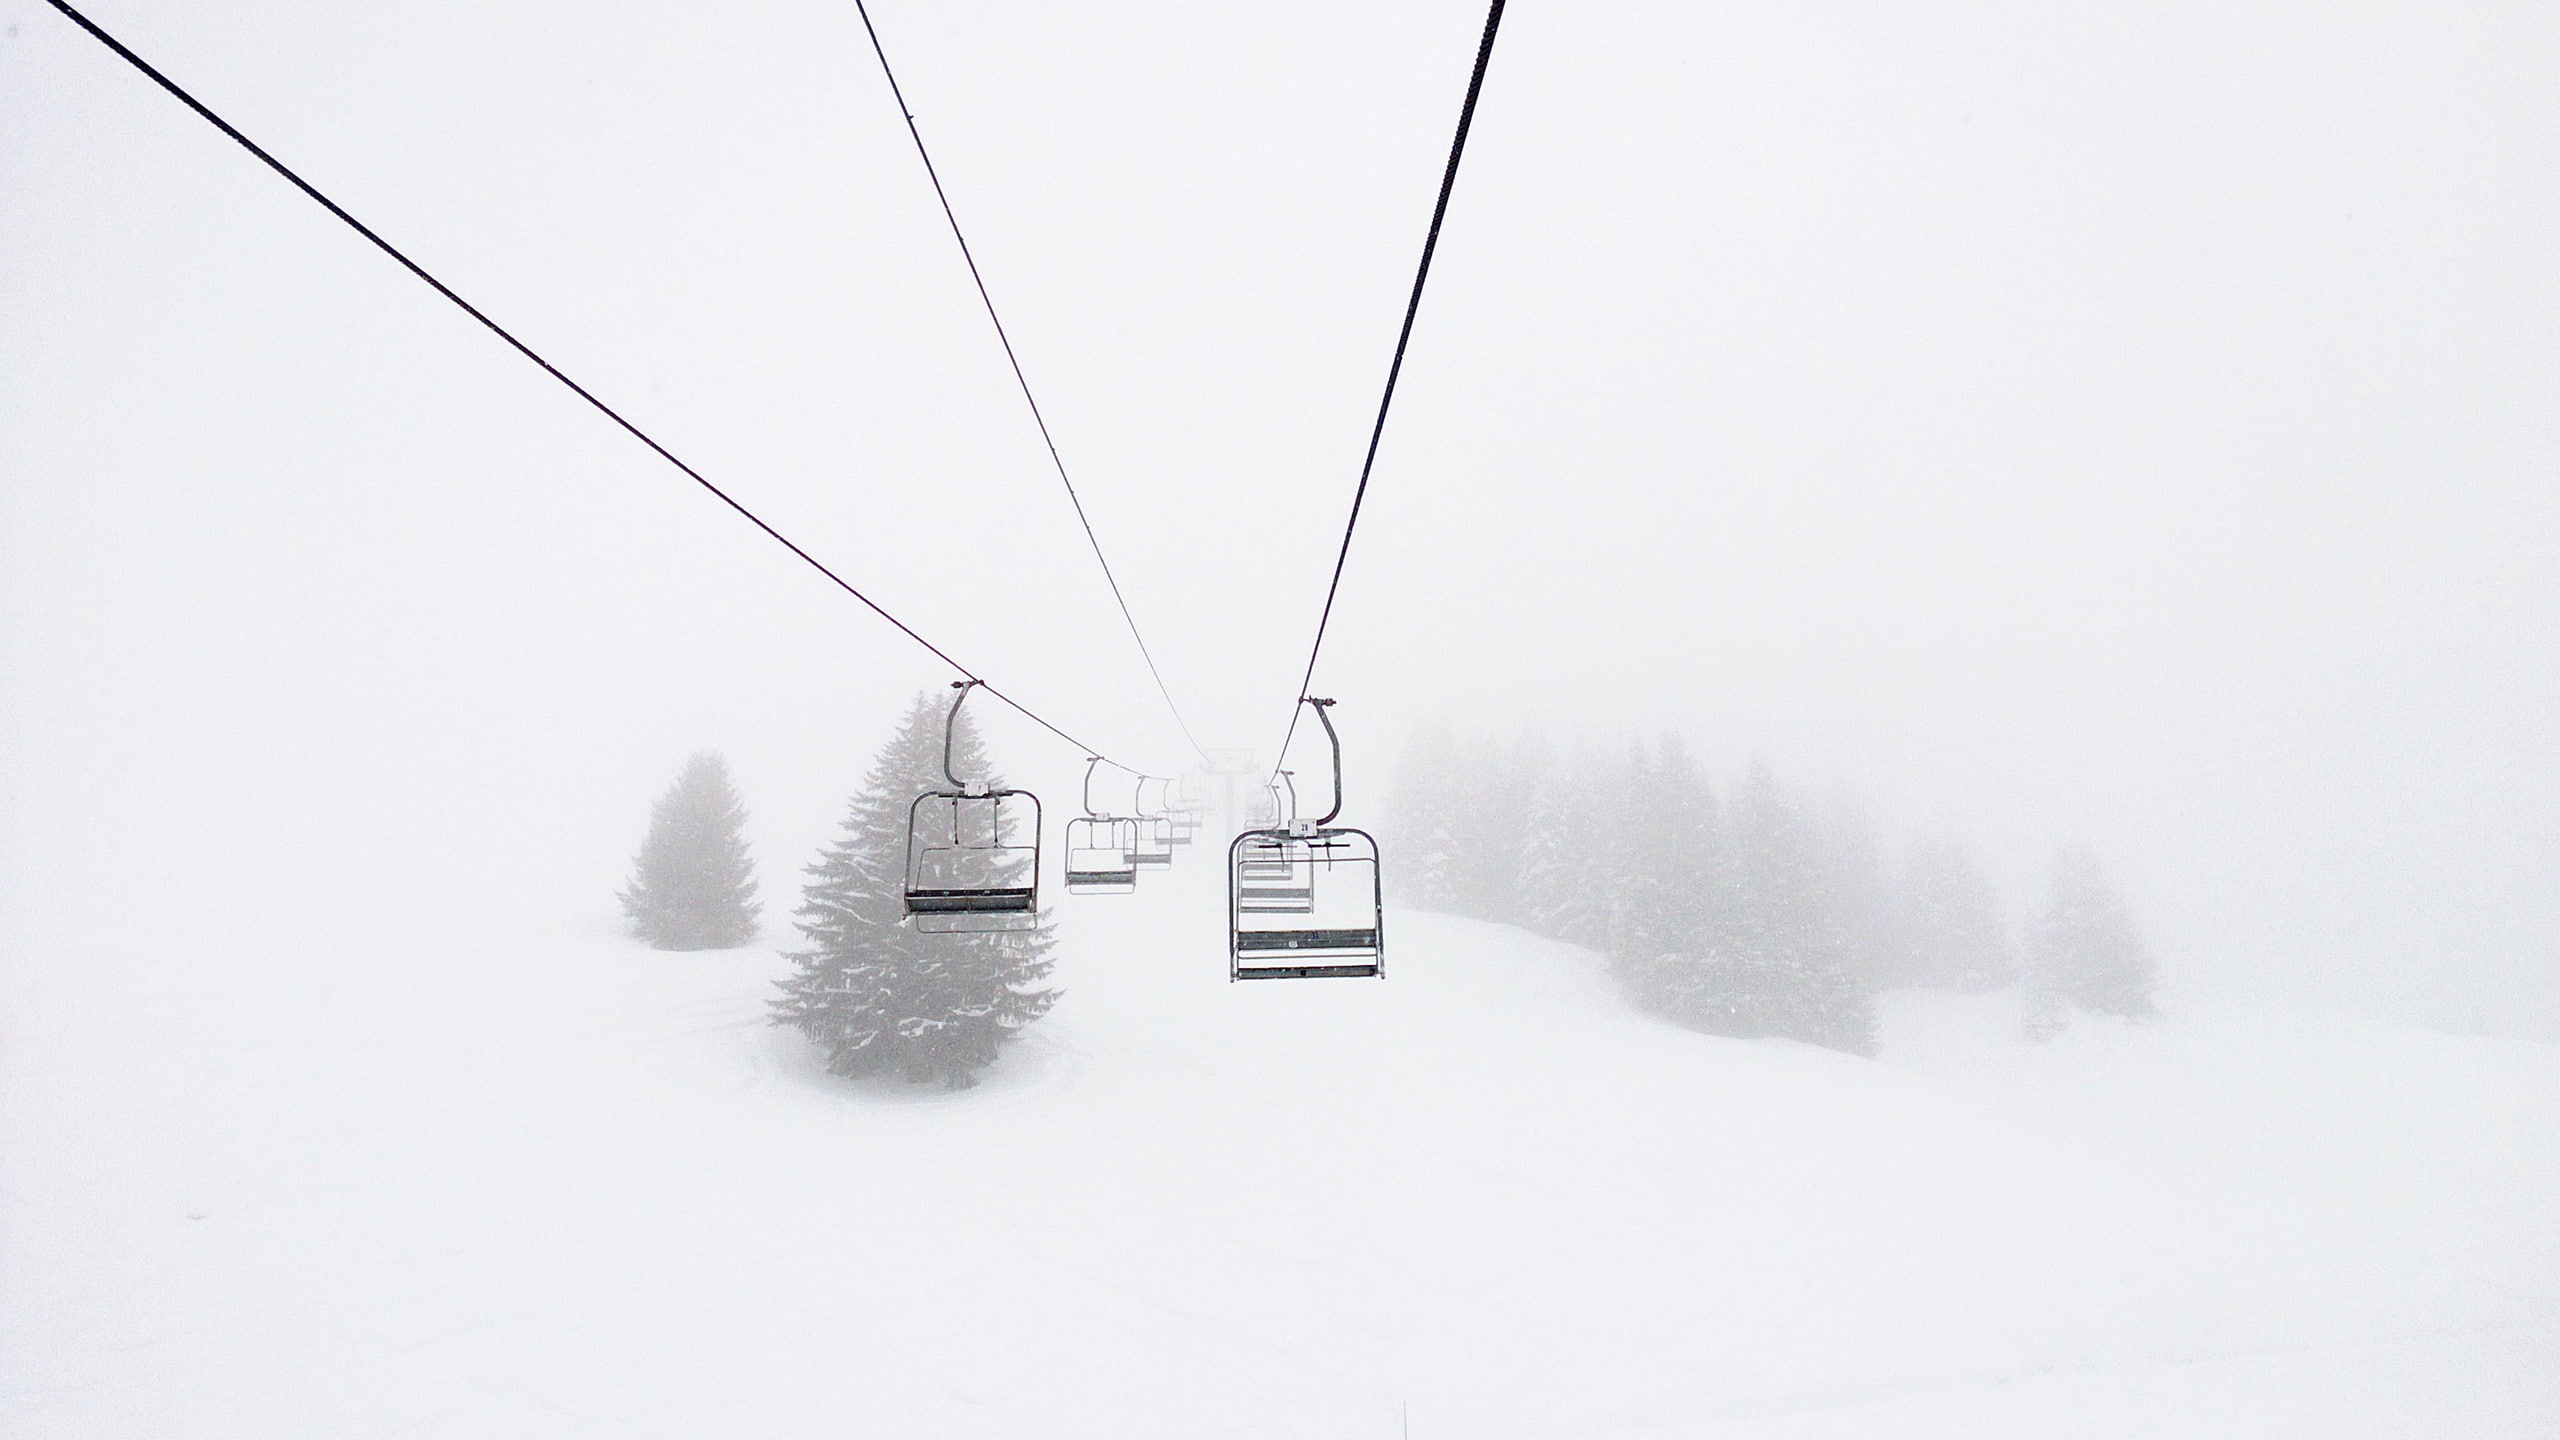 snow, ski lift, ski lifts, pine trees